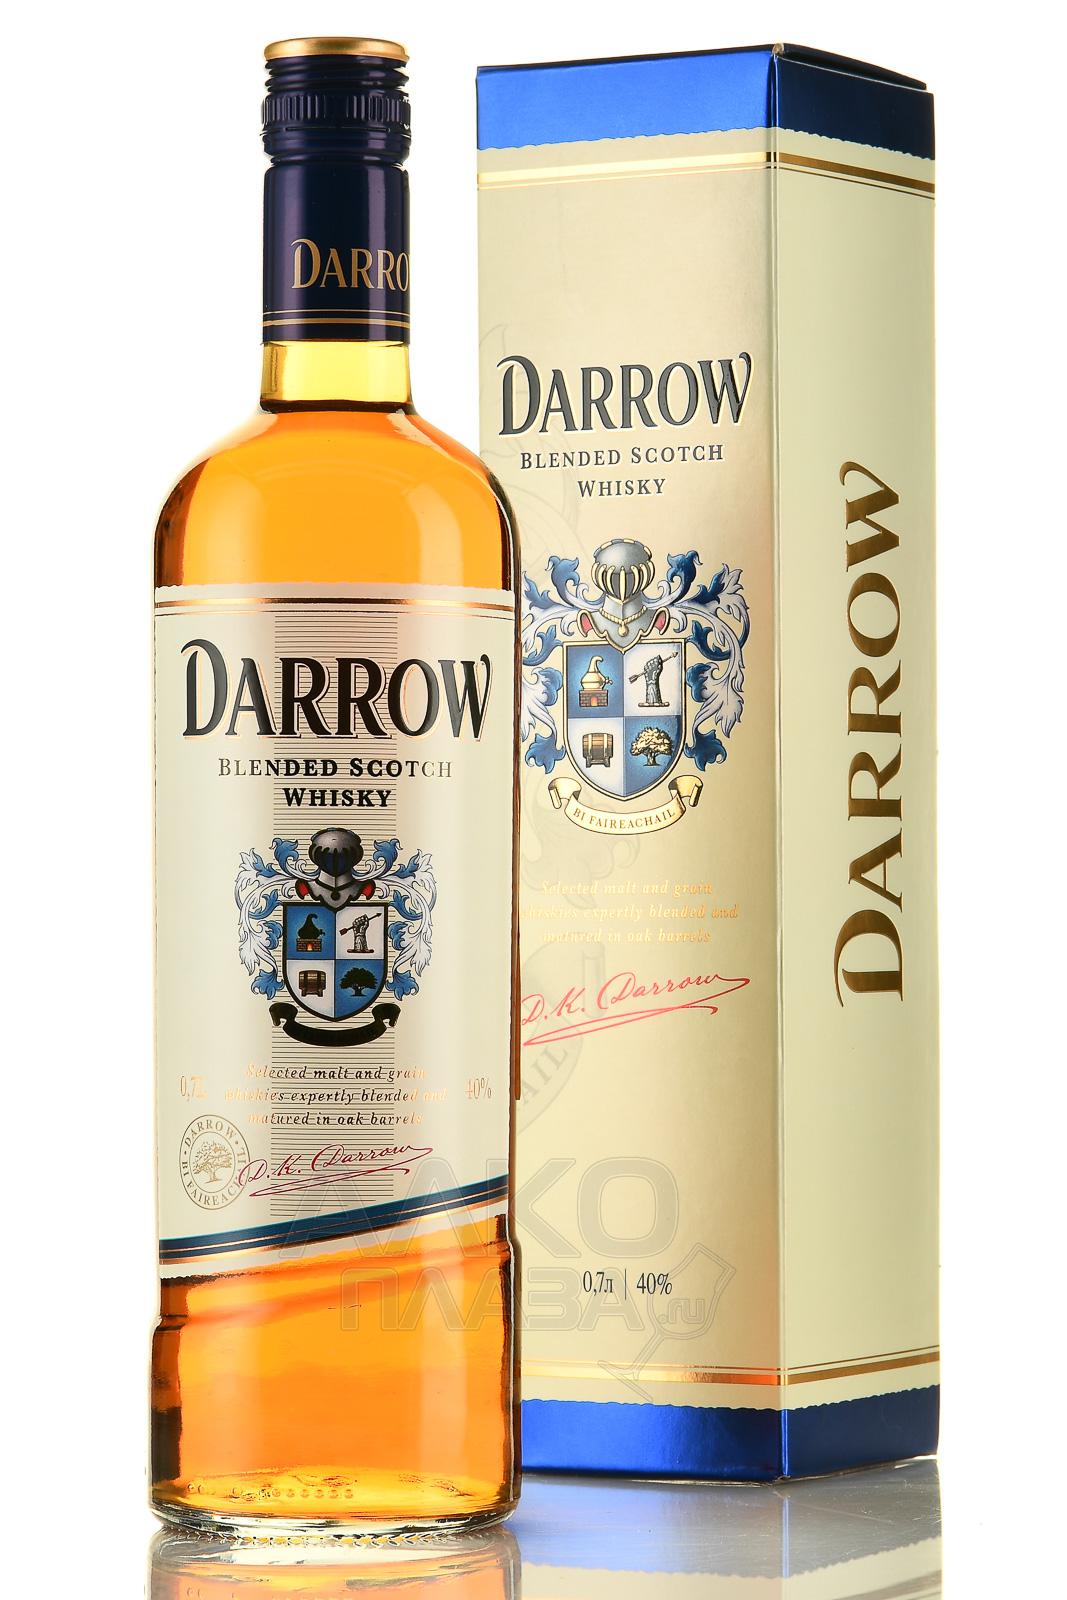 Darrow цена 0.7. Виски Дэрроу 0.7. Виски Дэрроу 40% 0.7. Darrow виски. Шотландский виски Дарроу.